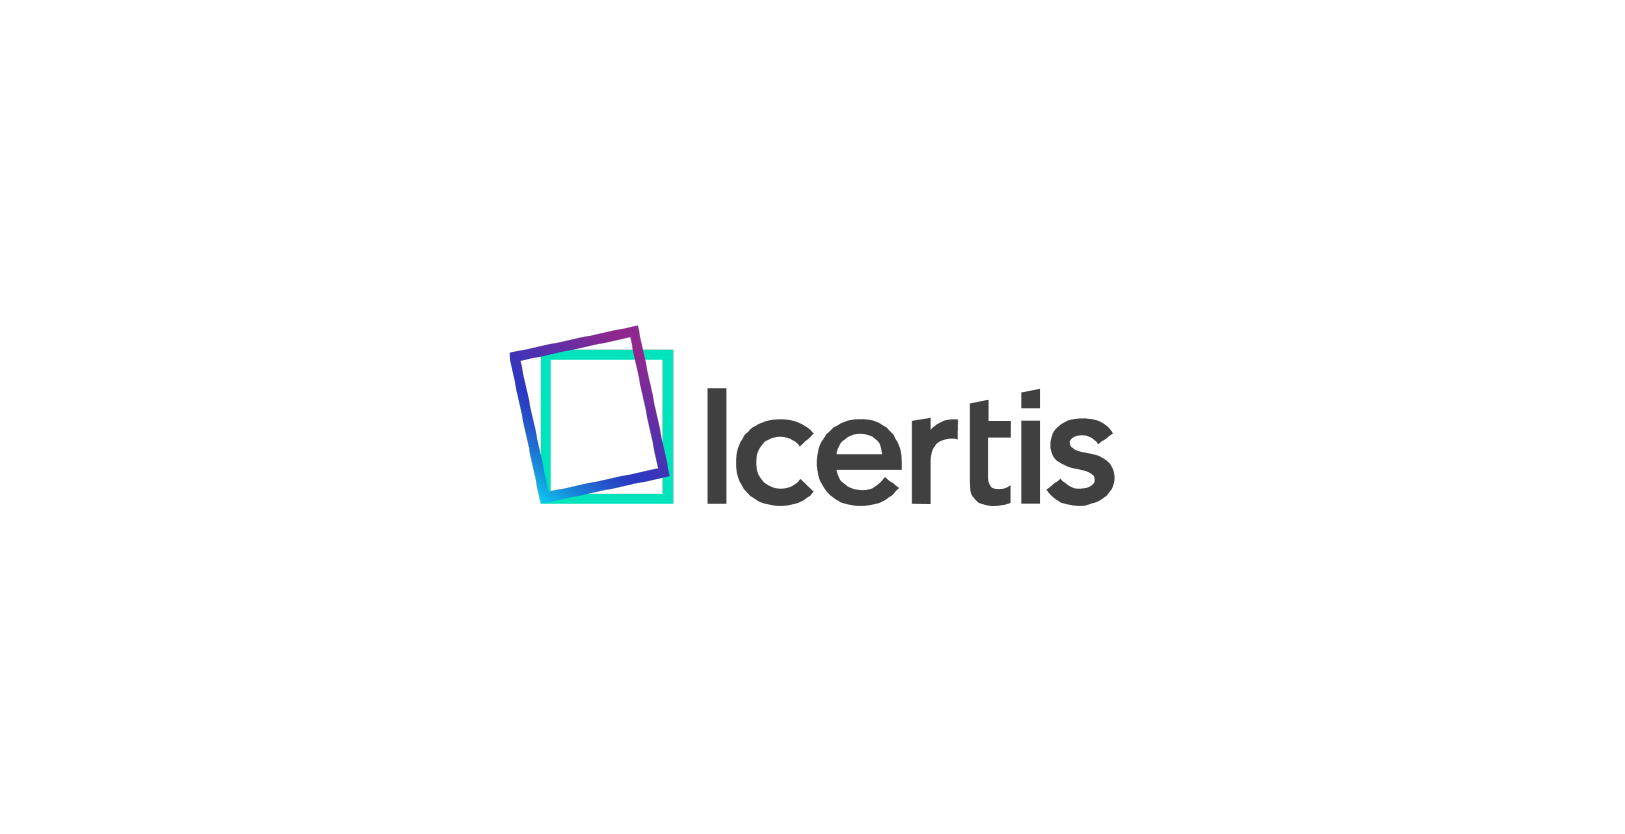 Vision Fund investment portfolio company Icertis's logo